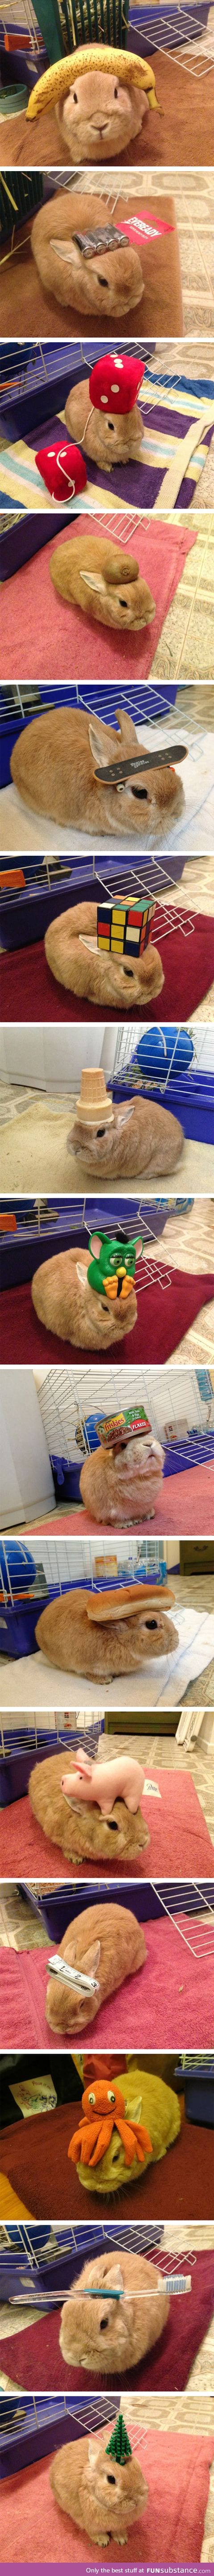 Different stuff on a rabbit